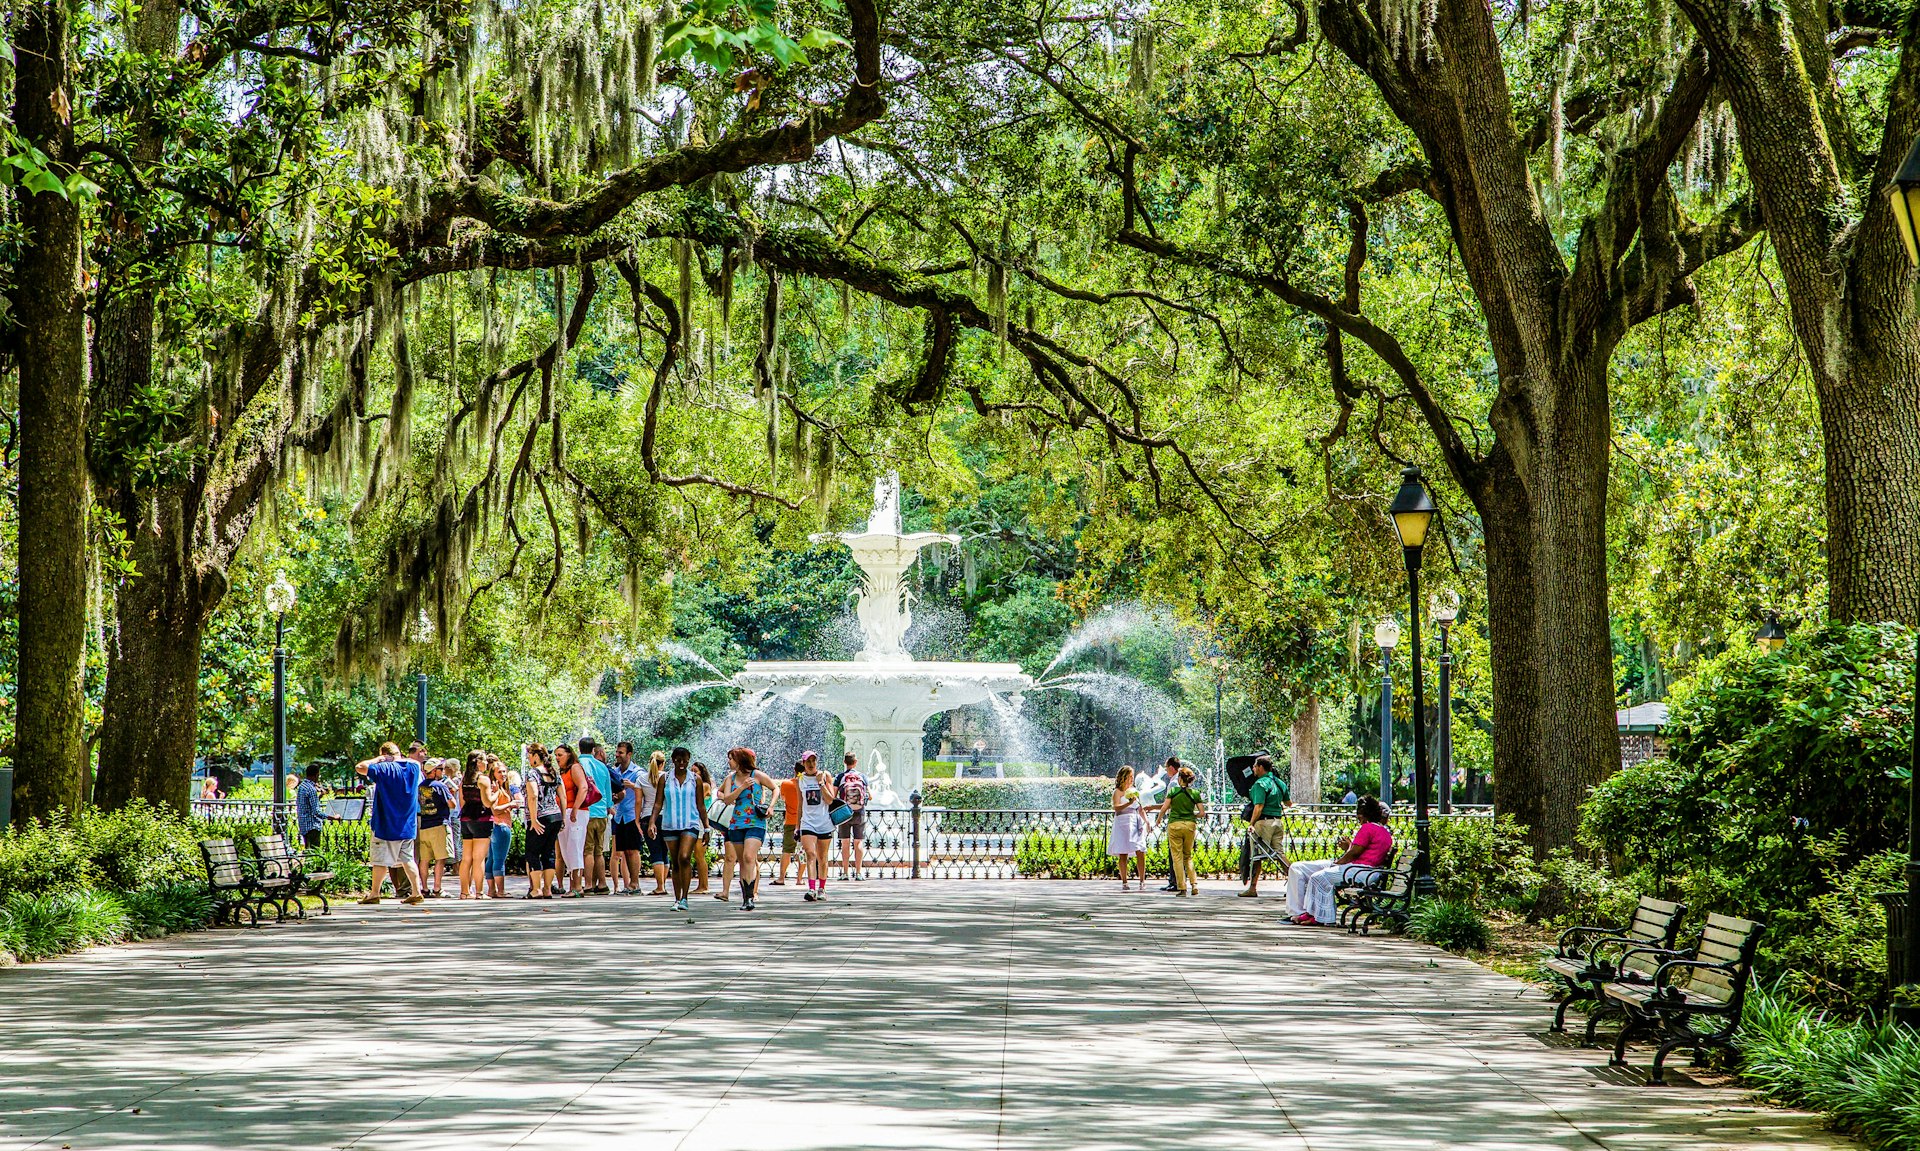 Park fountain with tourists in Savannah, Georgia at Forsyth Park.